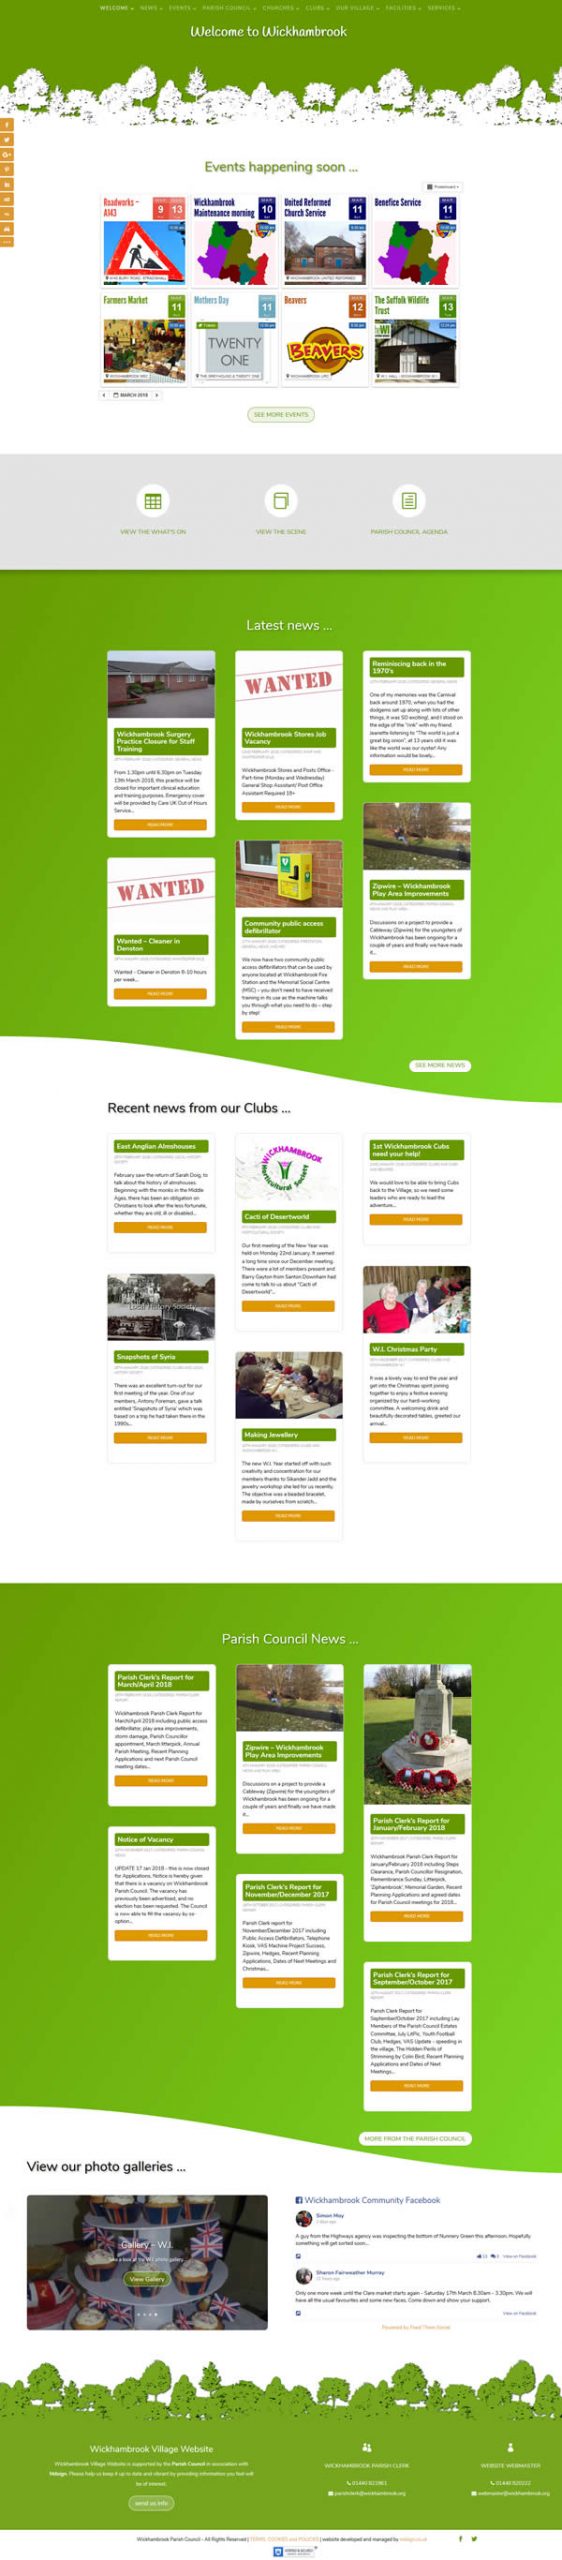 Wickhambrook village website by mdsign